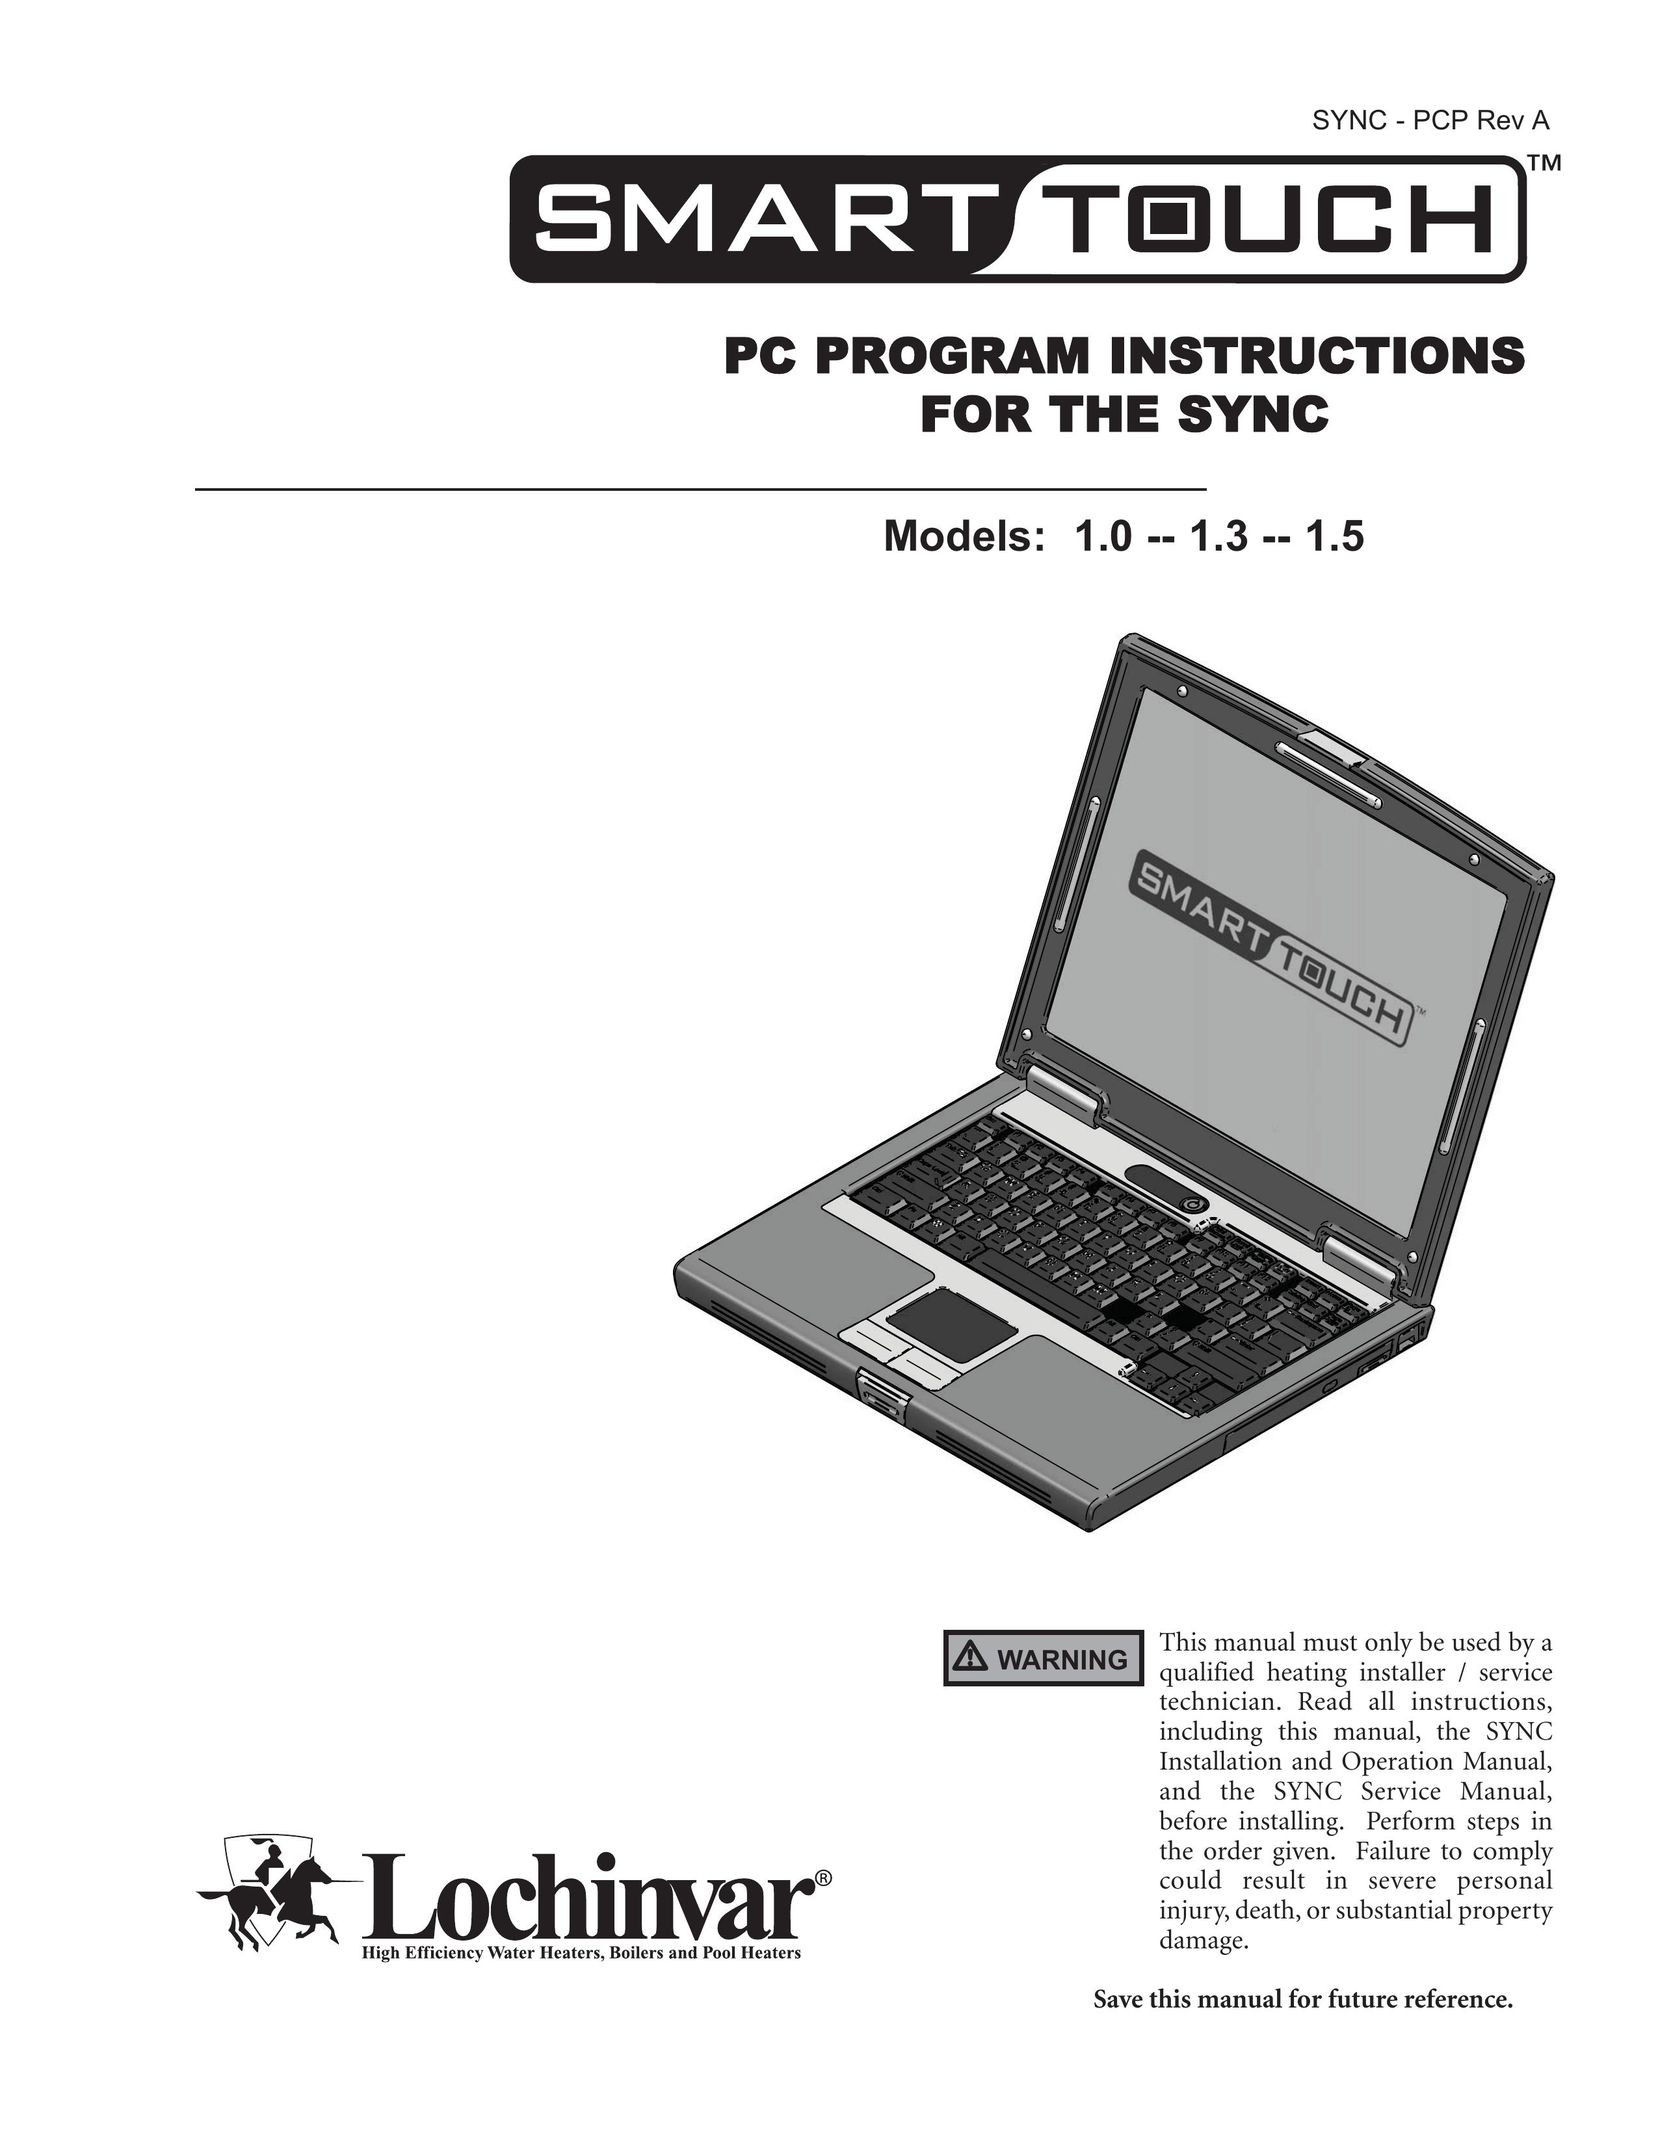 Lochinvar 1.5 Laptop User Manual